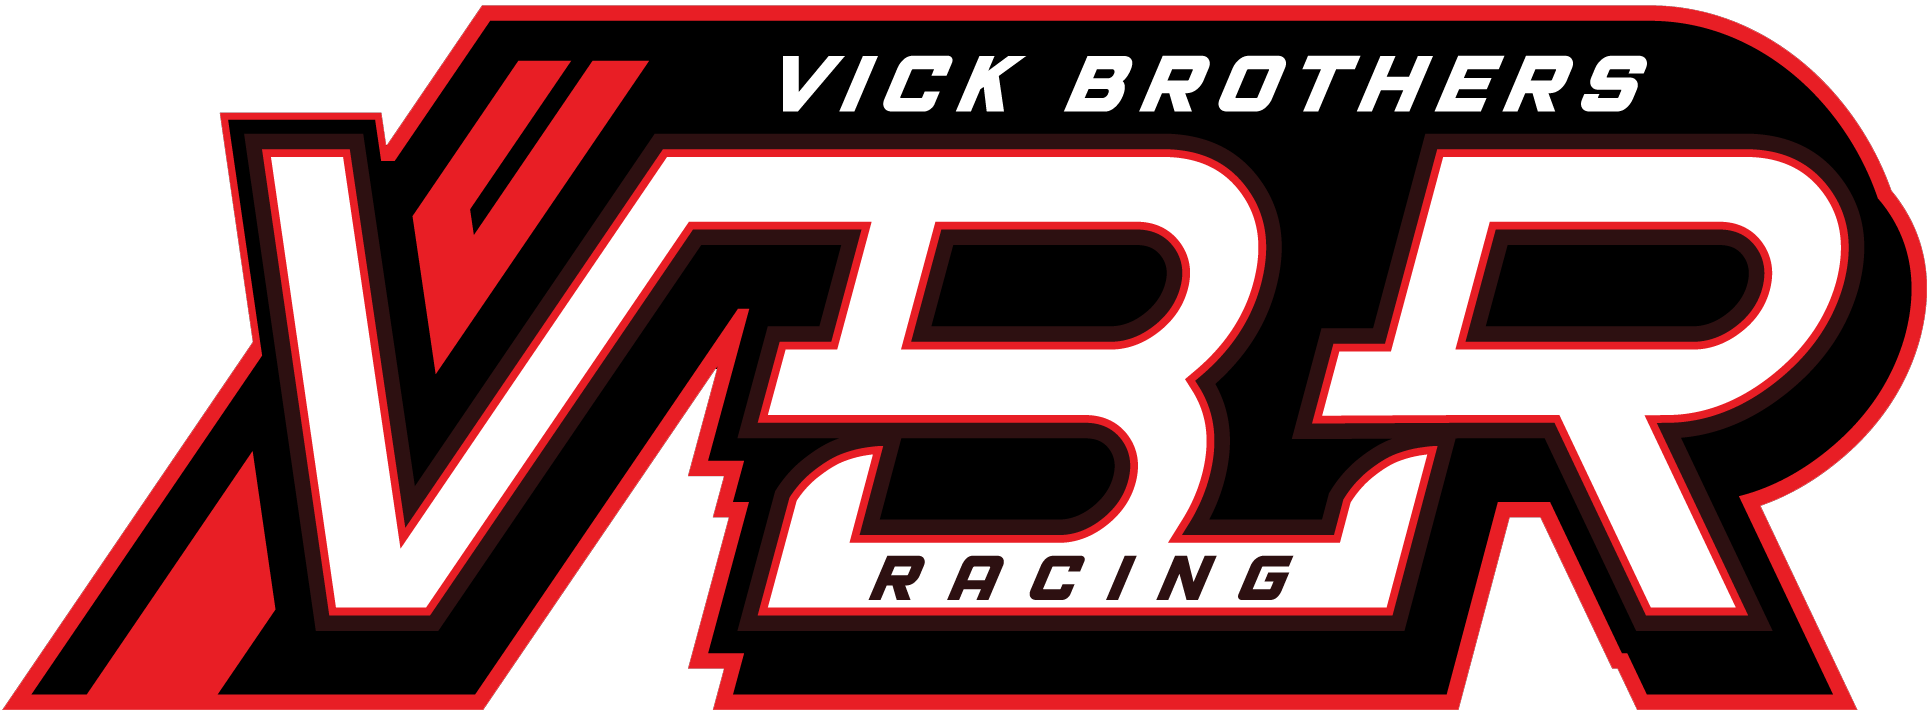 Vick Brothers Racing